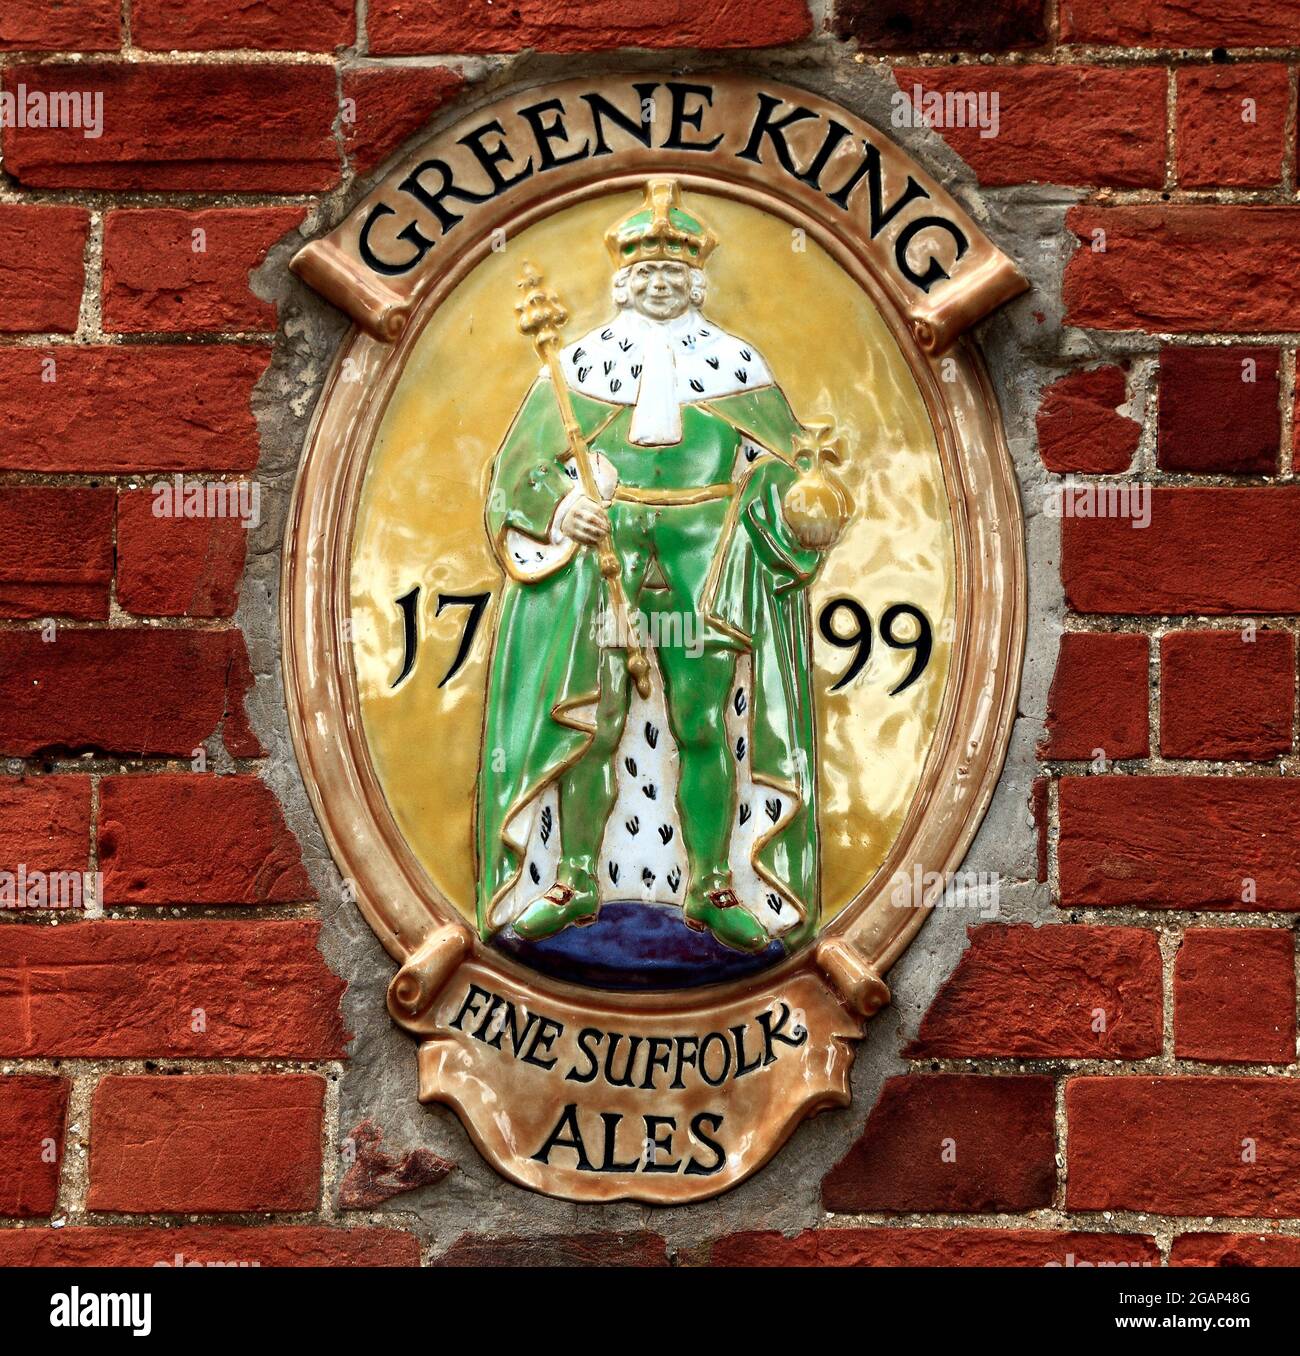 Greene King Brewery plaque Stock Photo